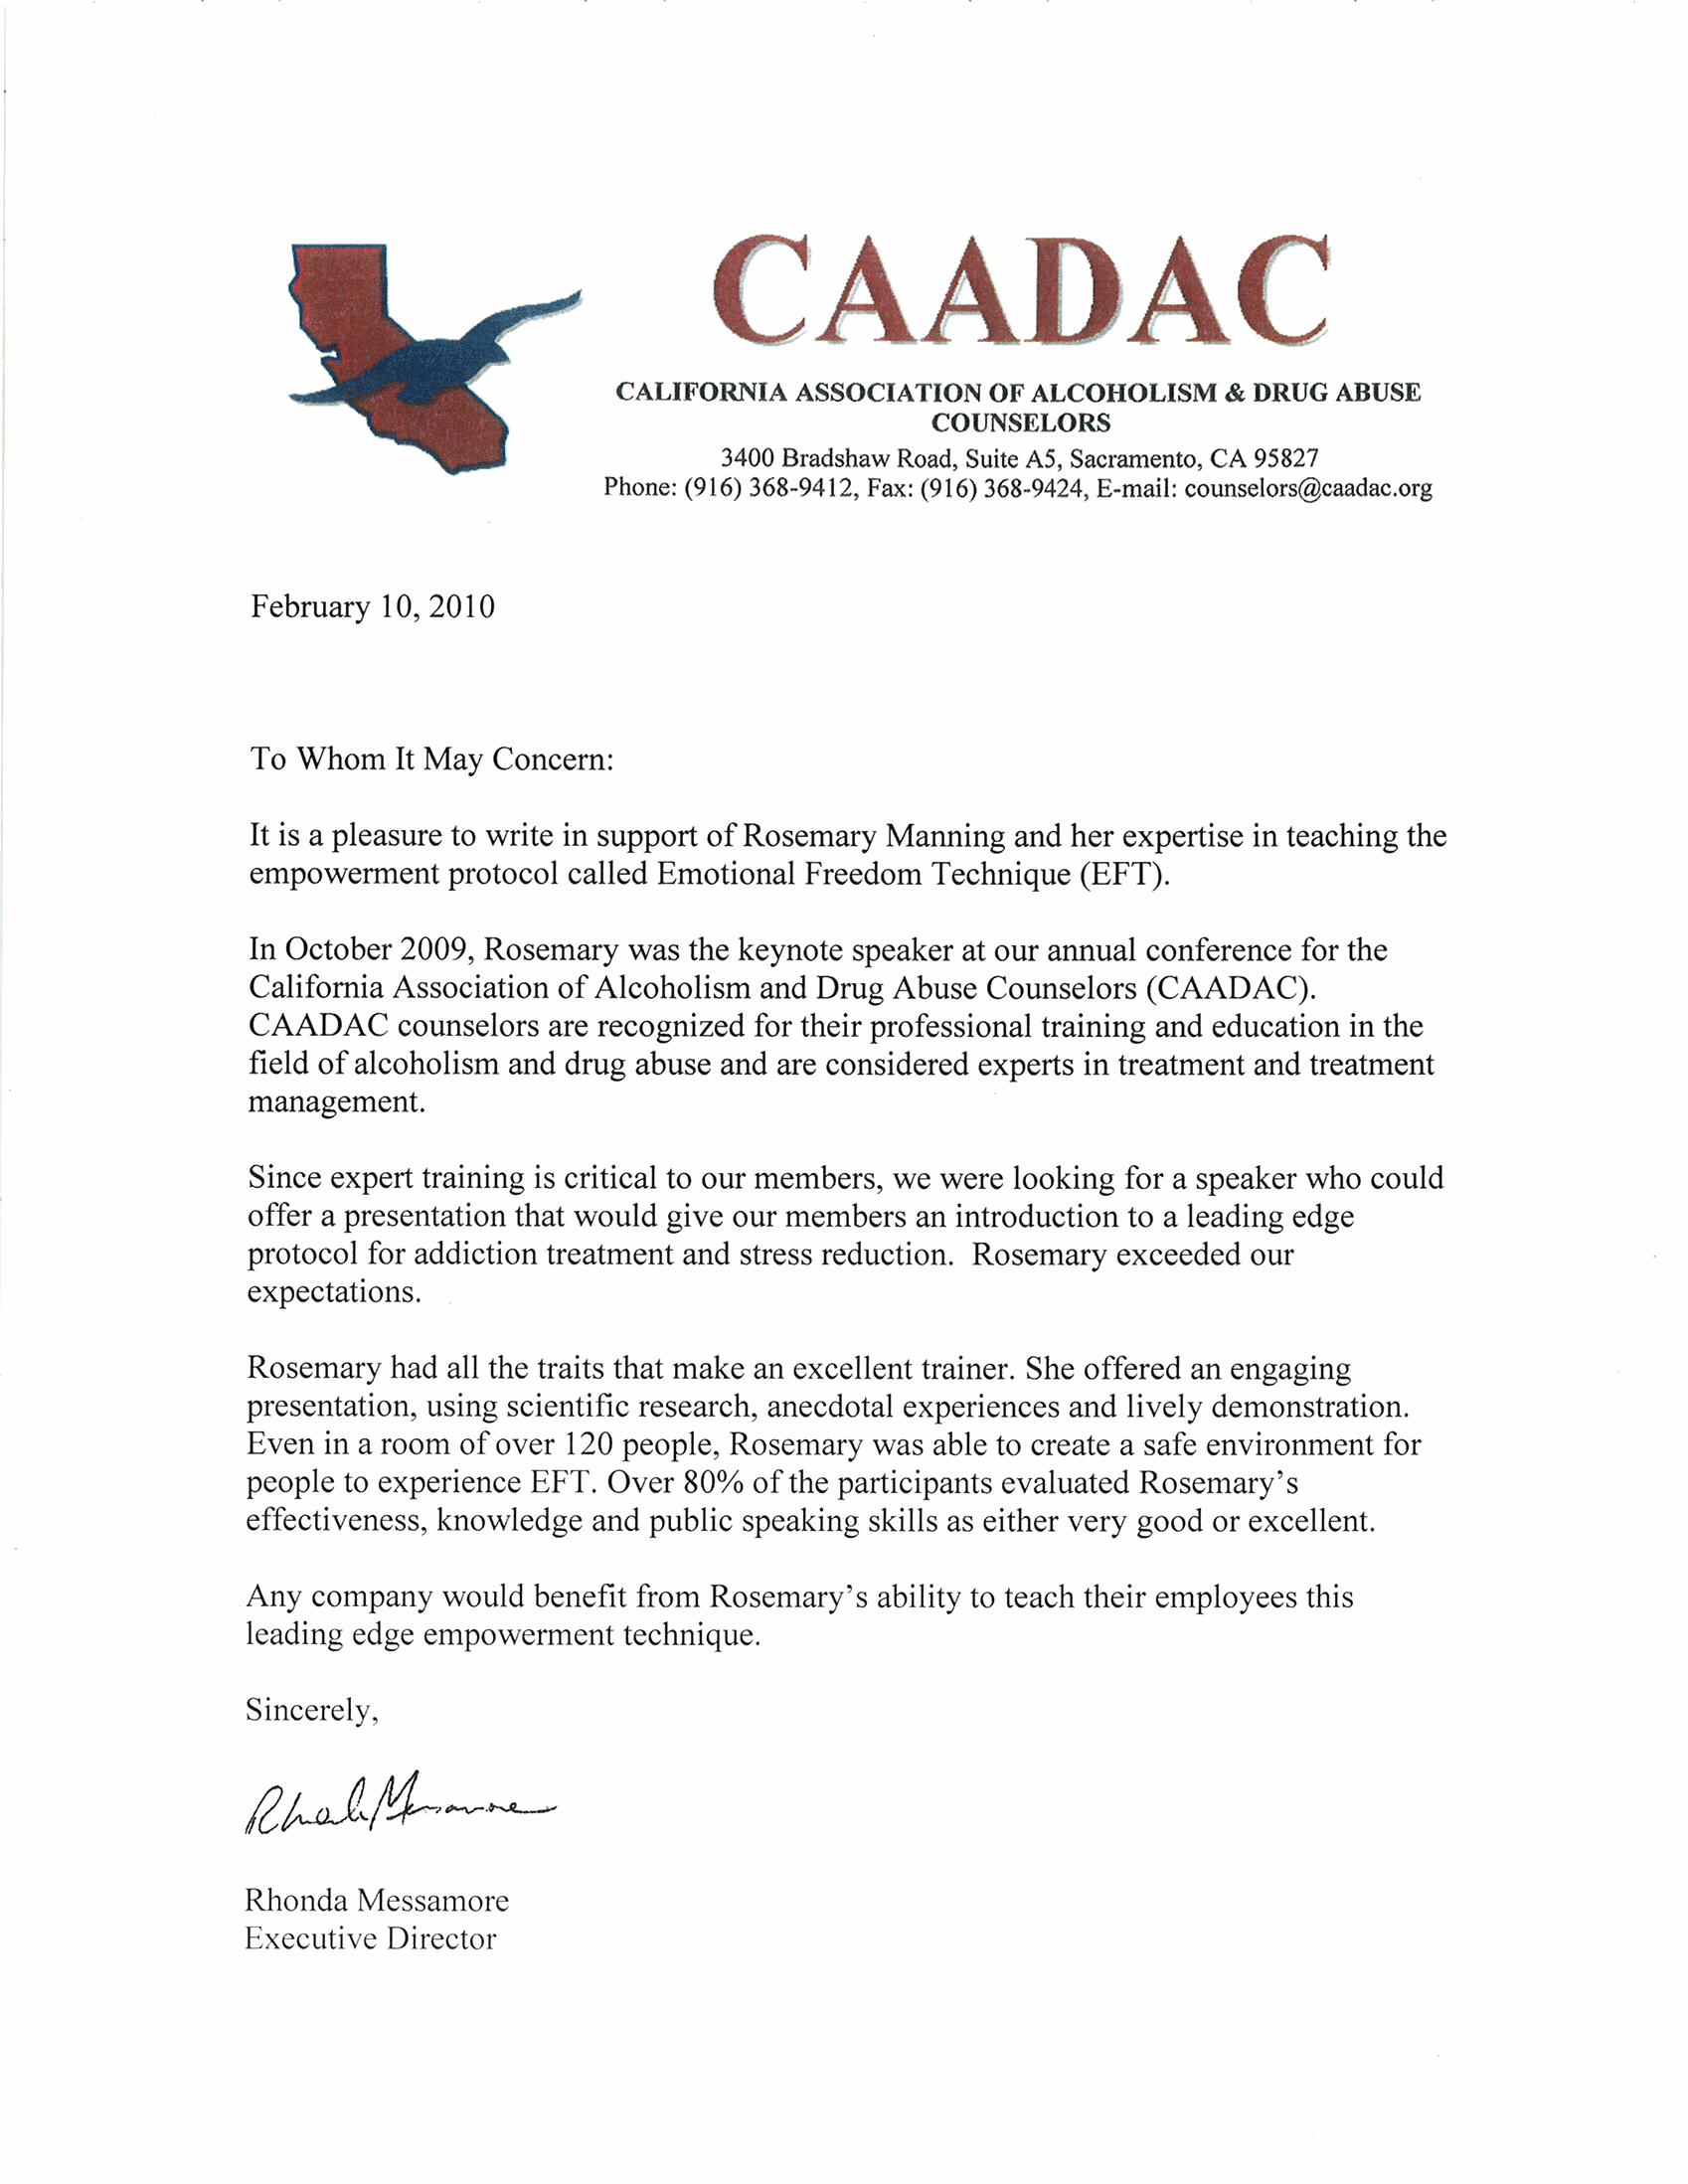 CAADAC letter